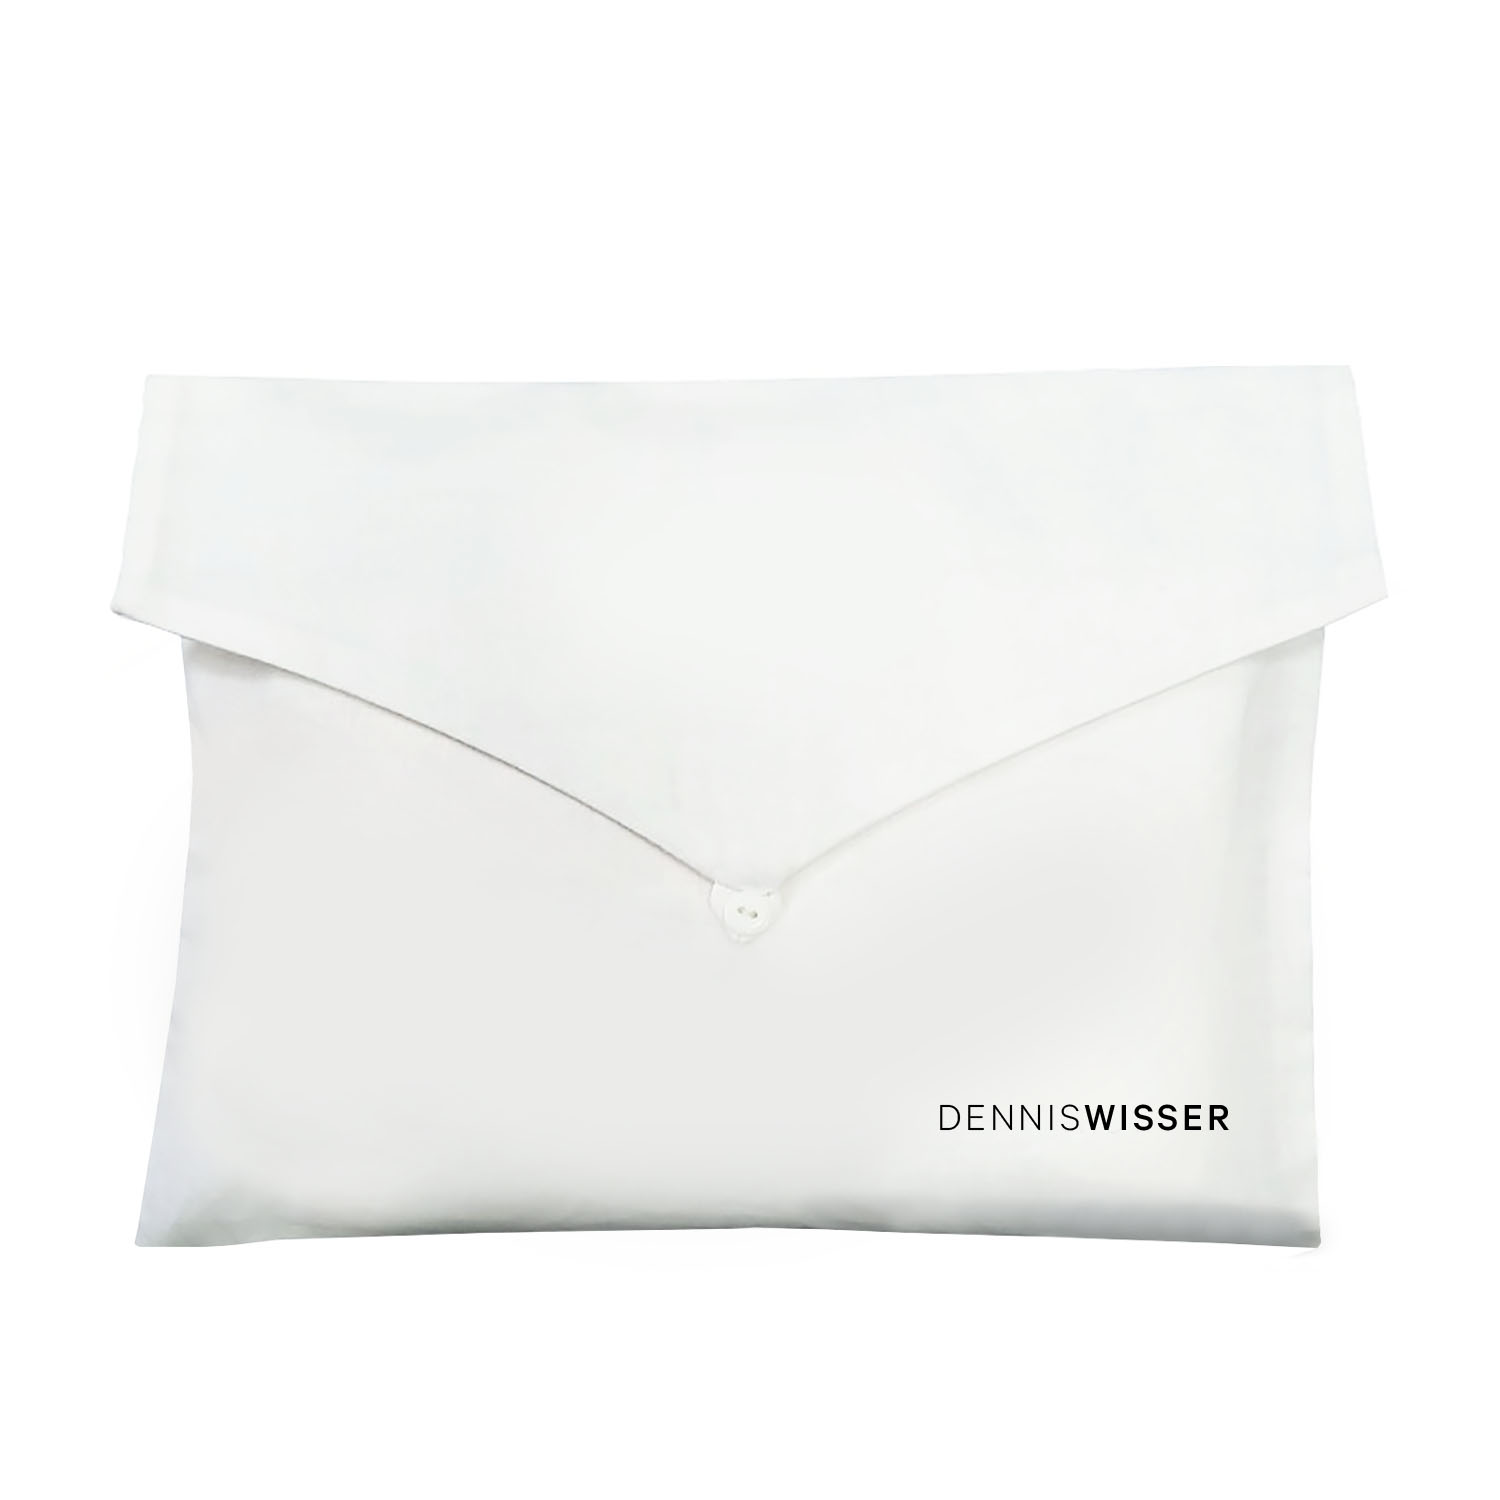 Large white cotton envelope